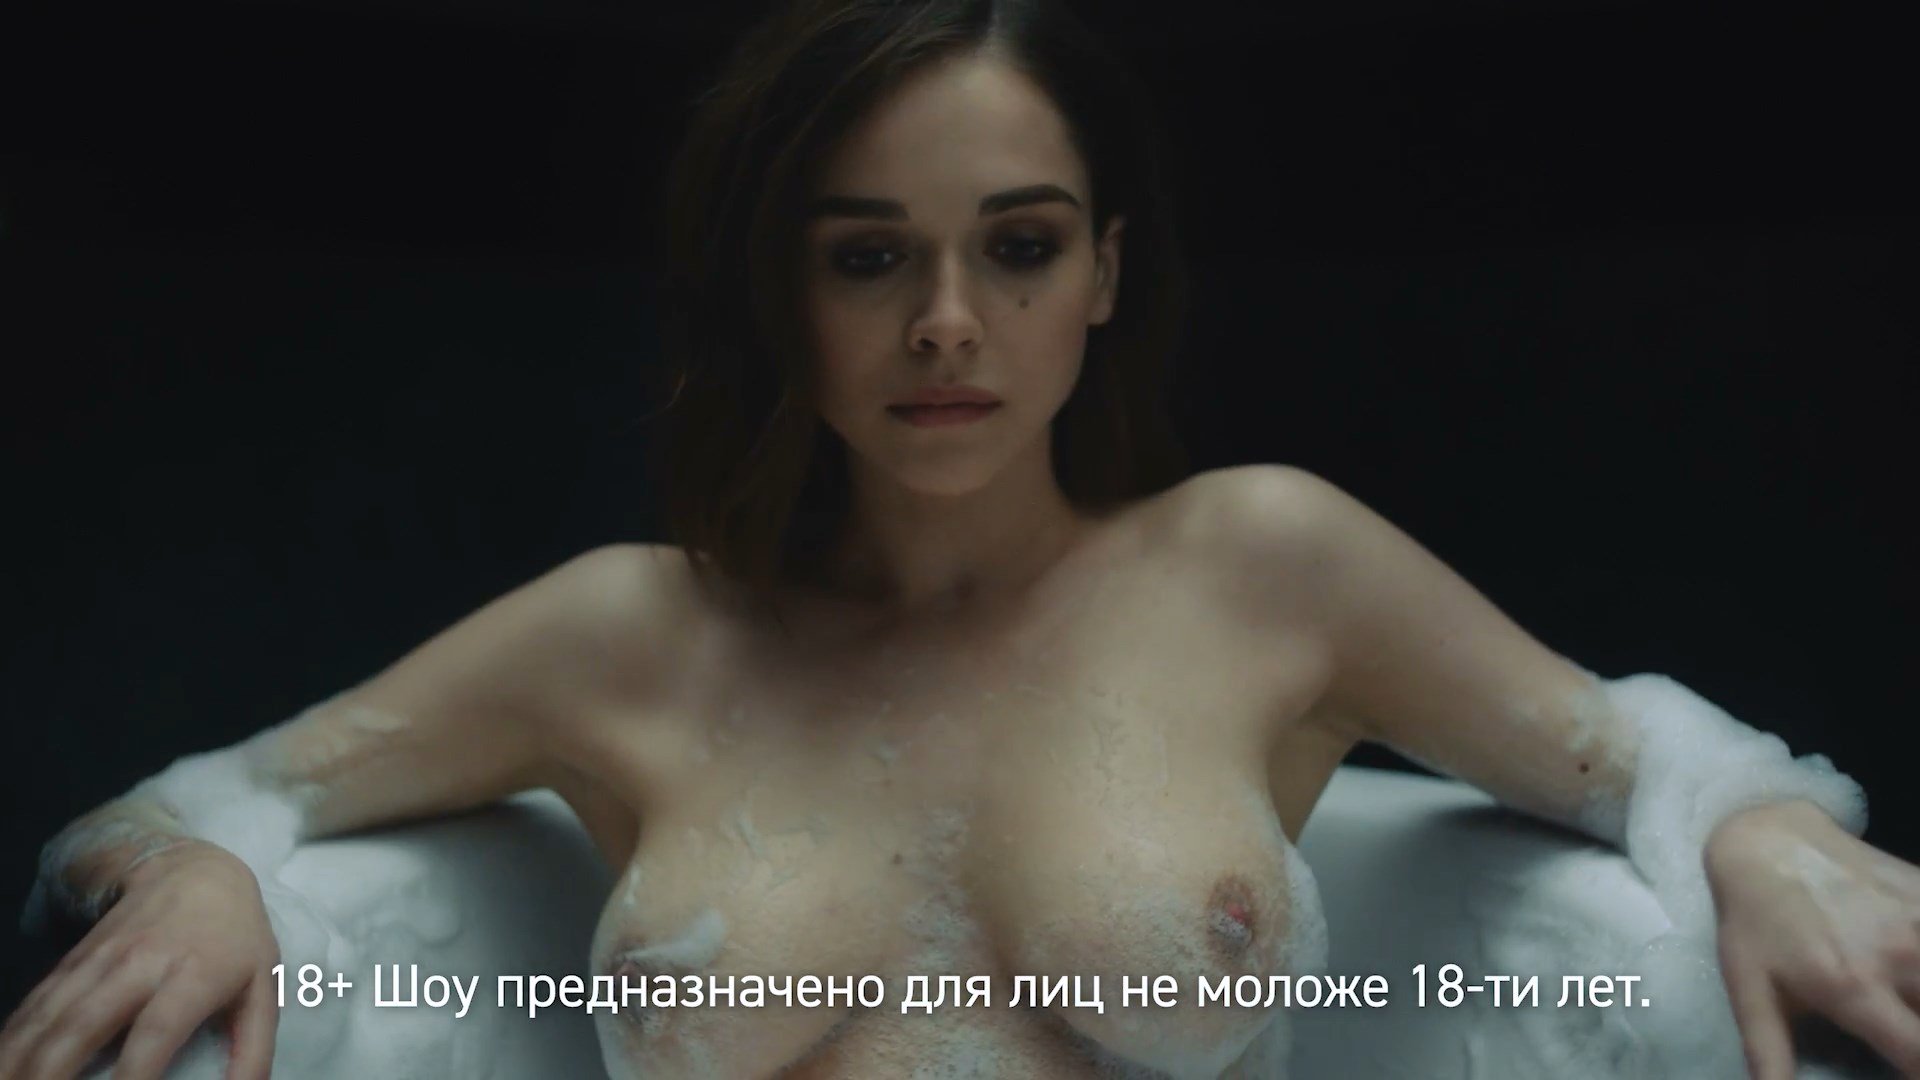 Sofia sinitsyna nude